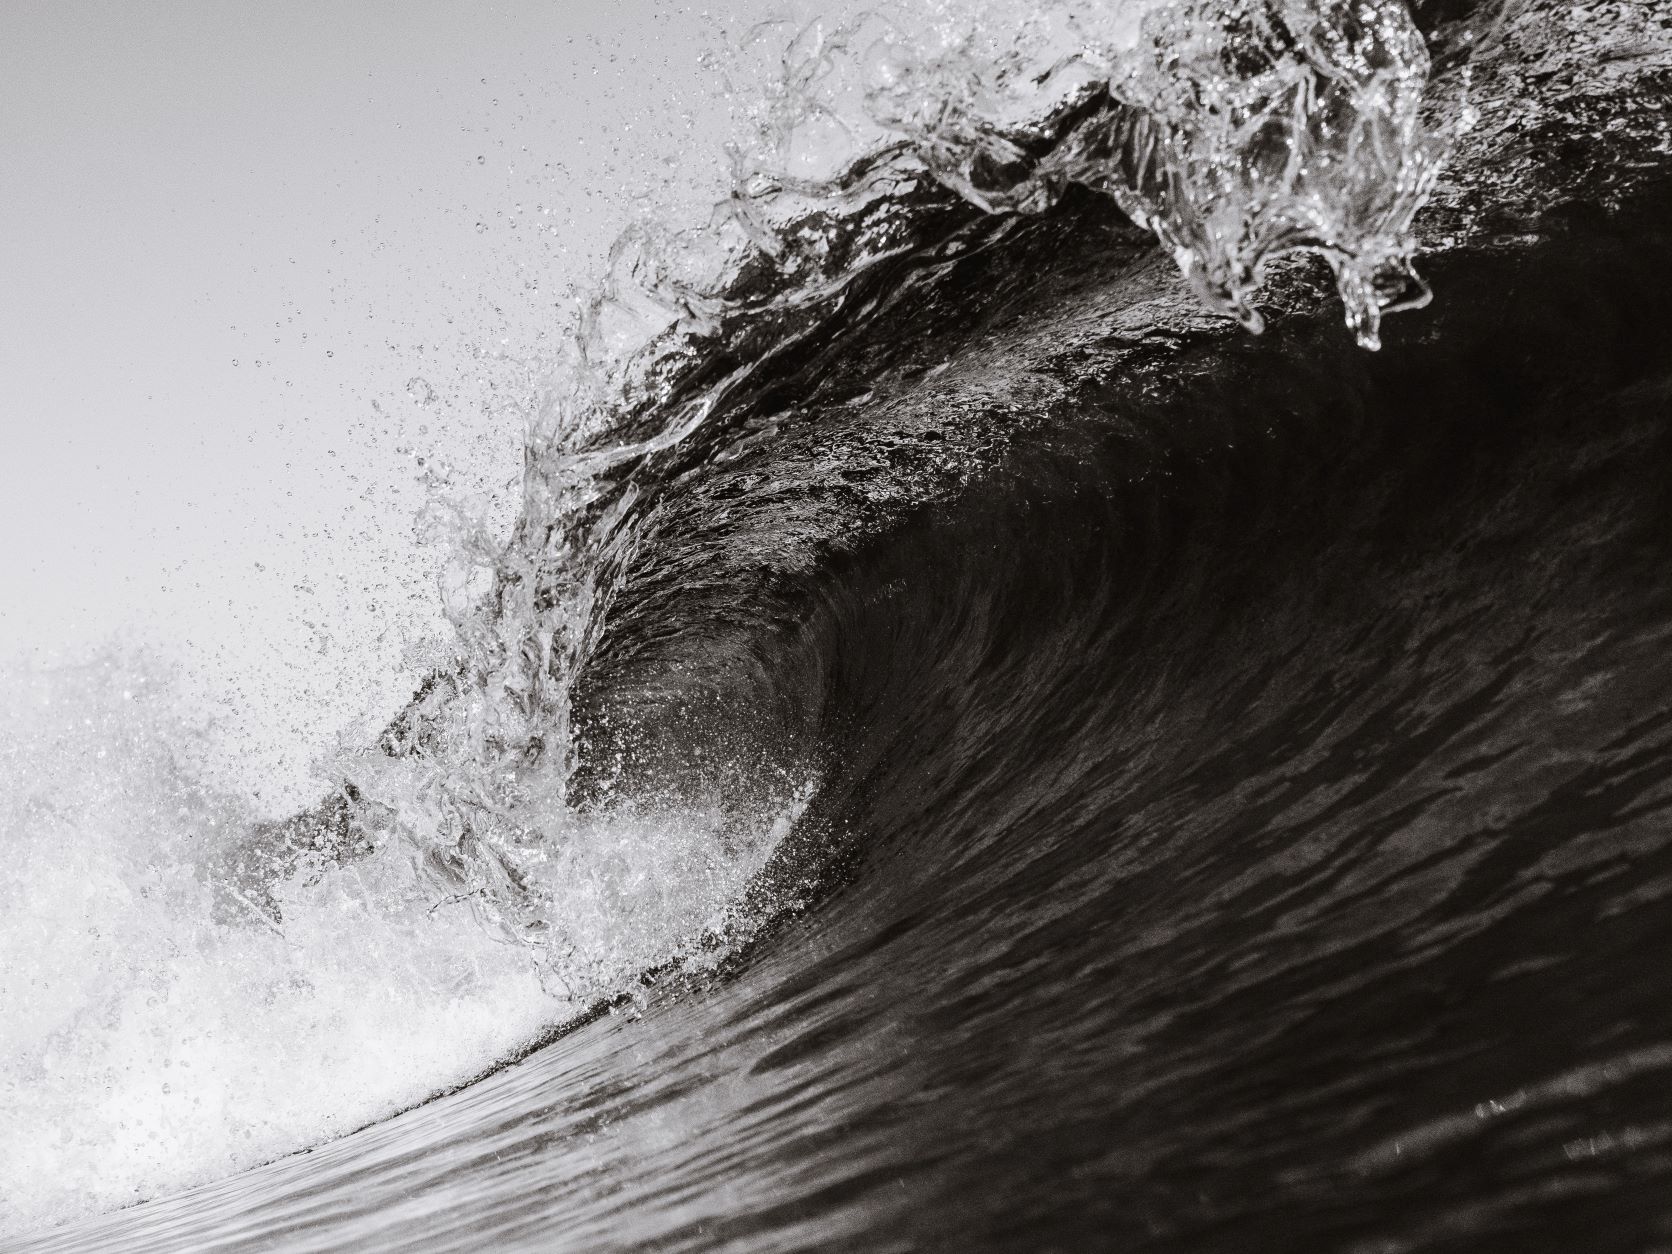 Black and white image of a wave crashing.